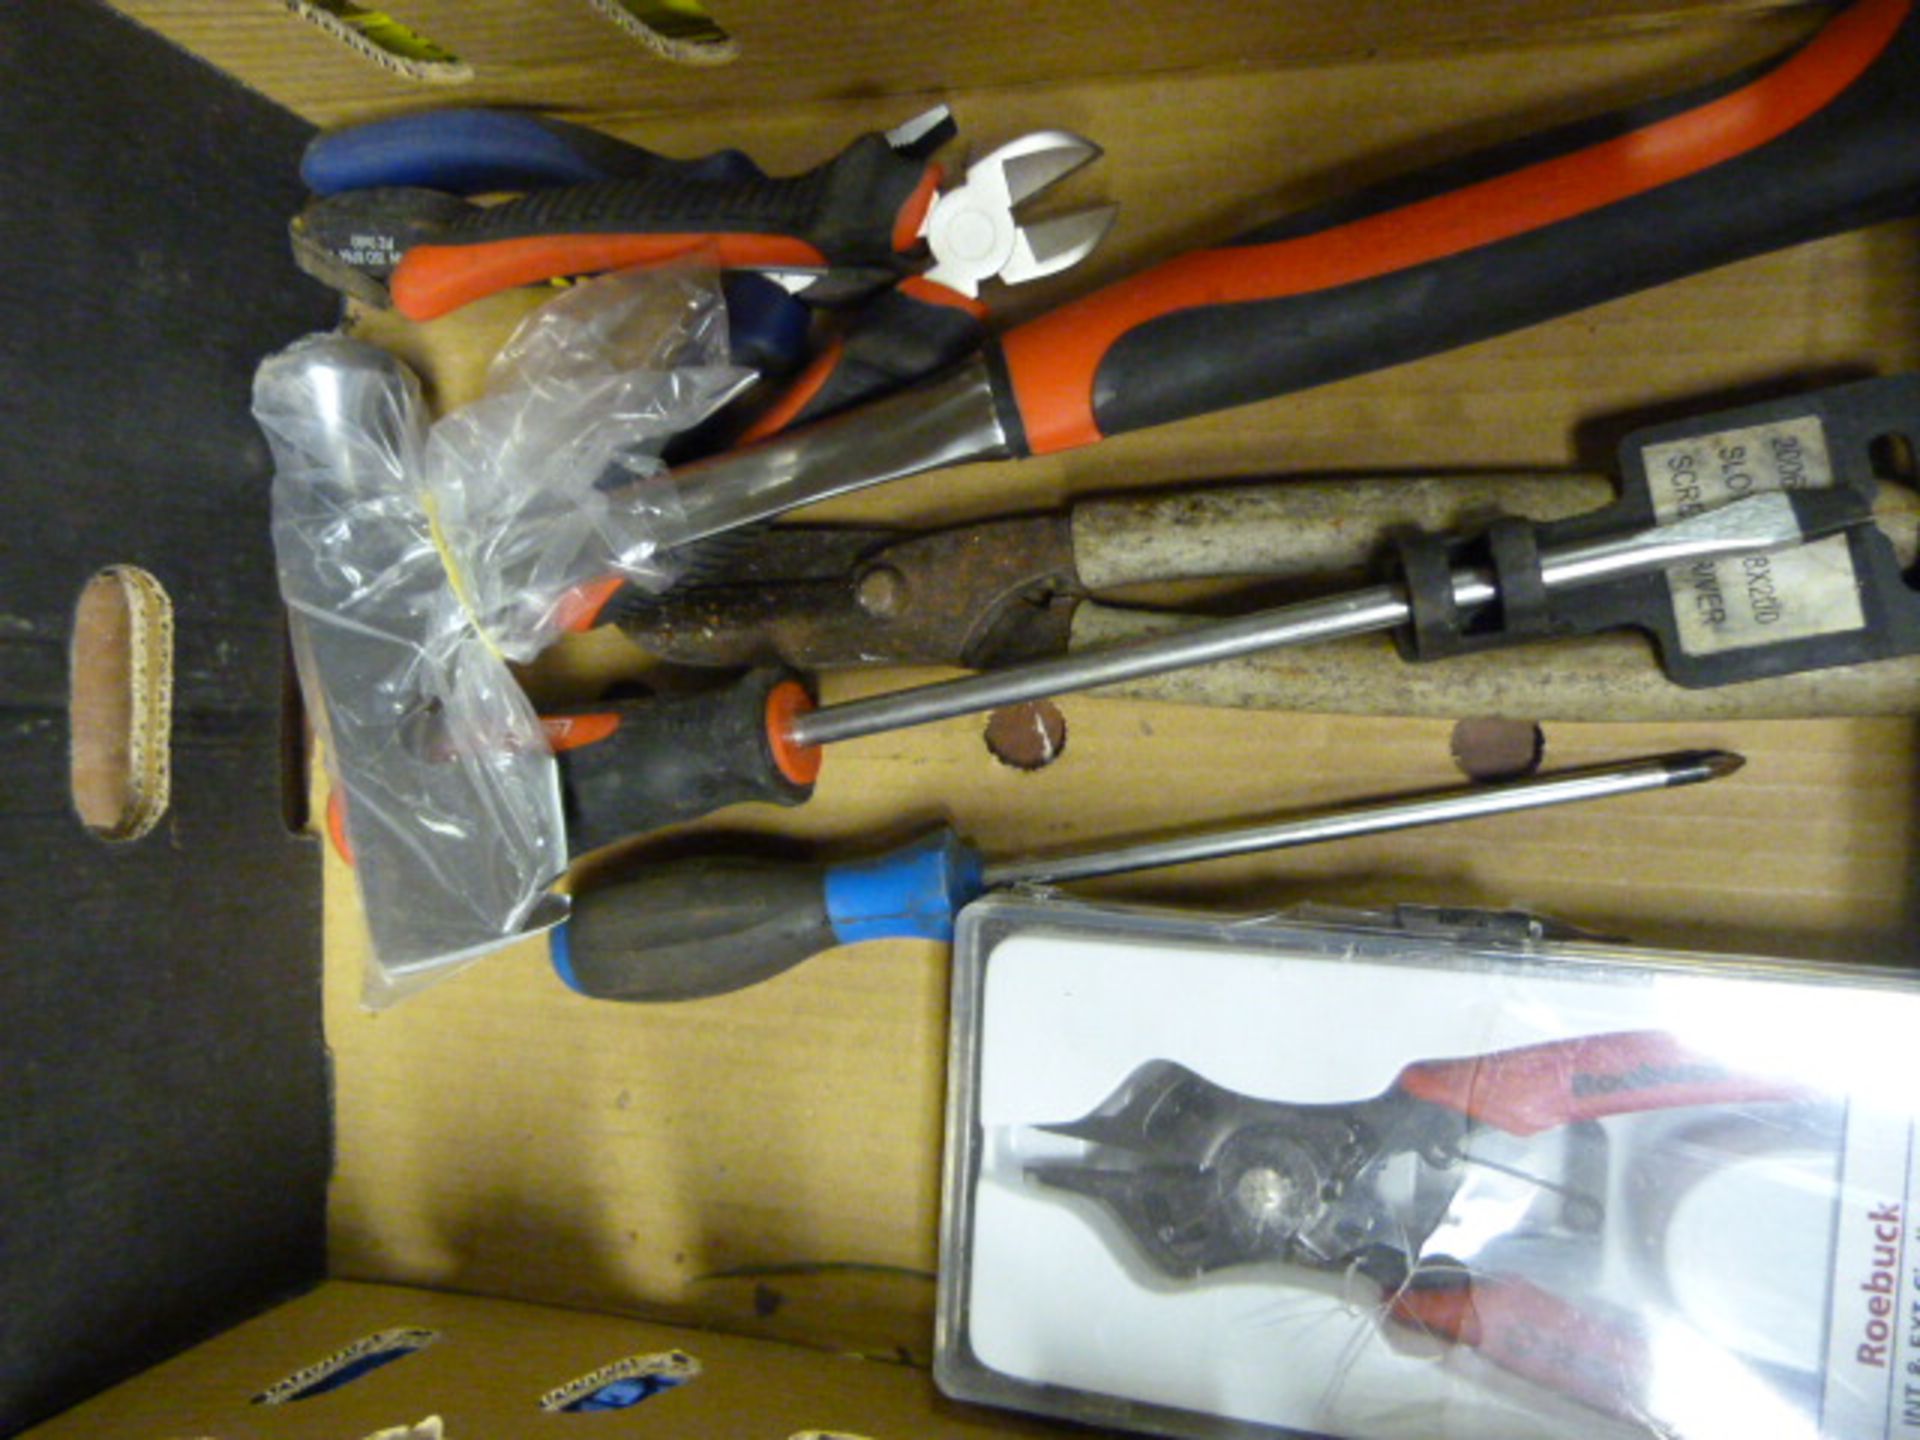 *Small Box of Tools, Circlip Pliers, Screwdrivers,